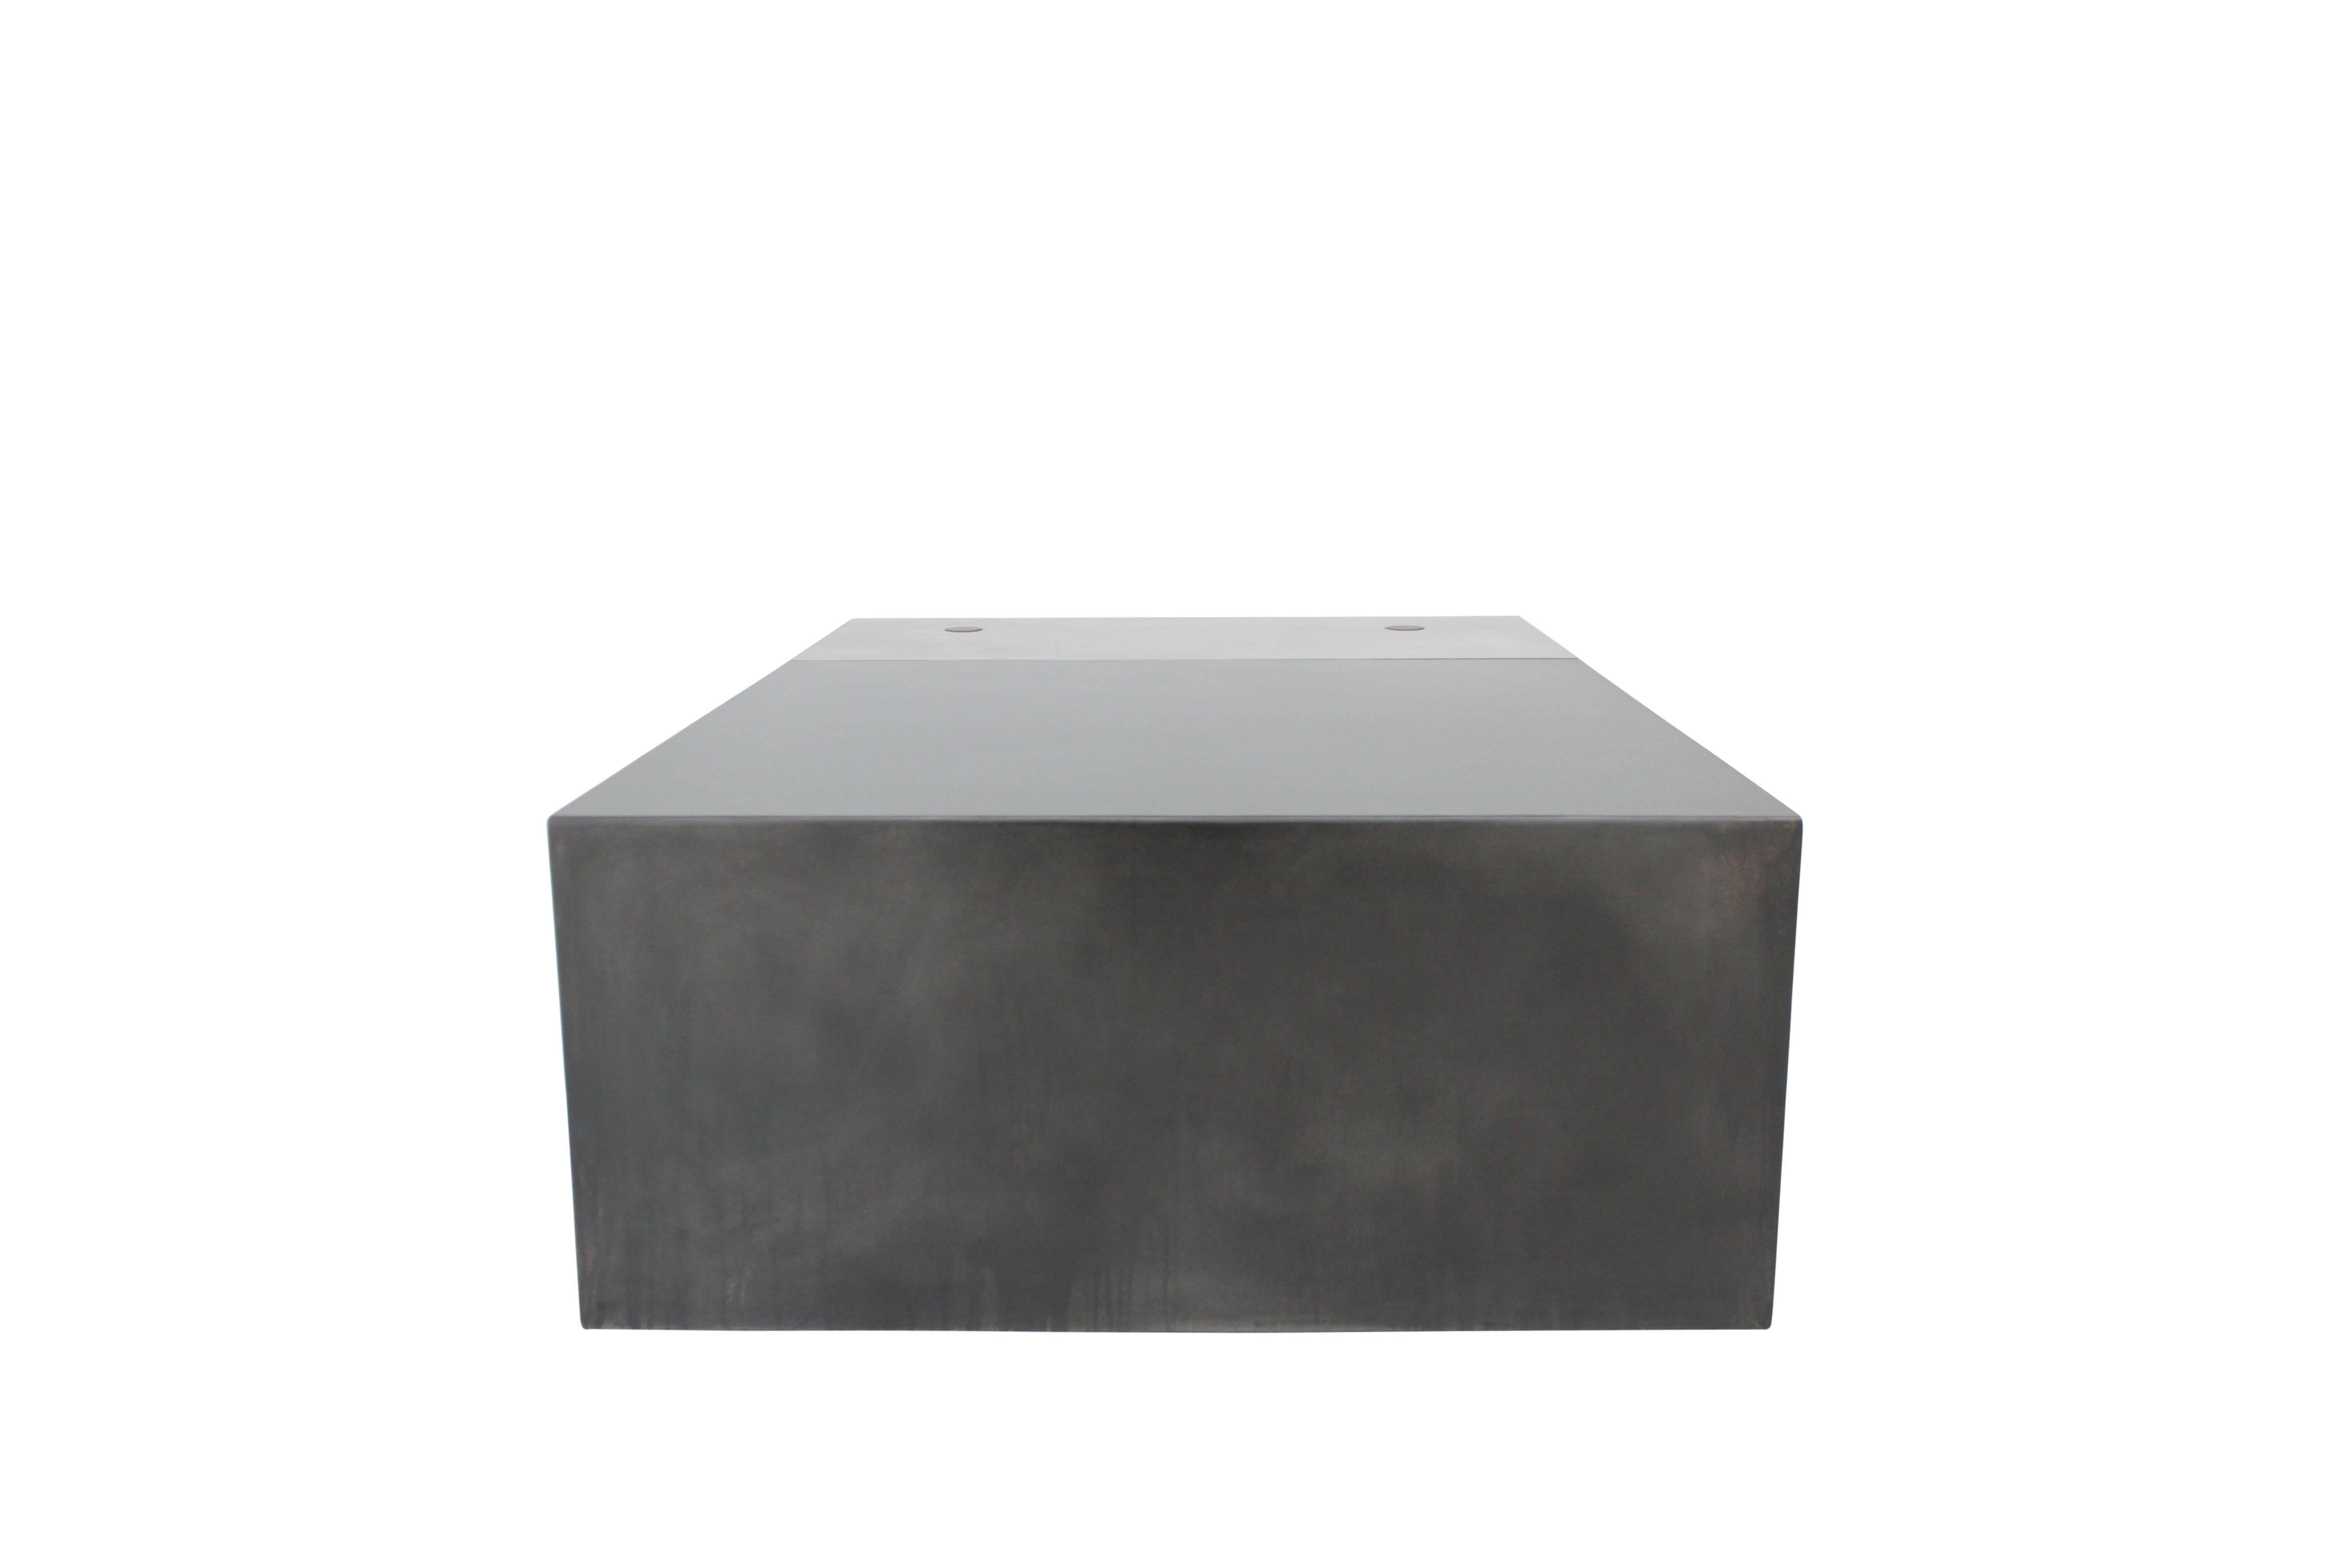 Cast Concrete, Hand-Blackened Steel and Walnut 